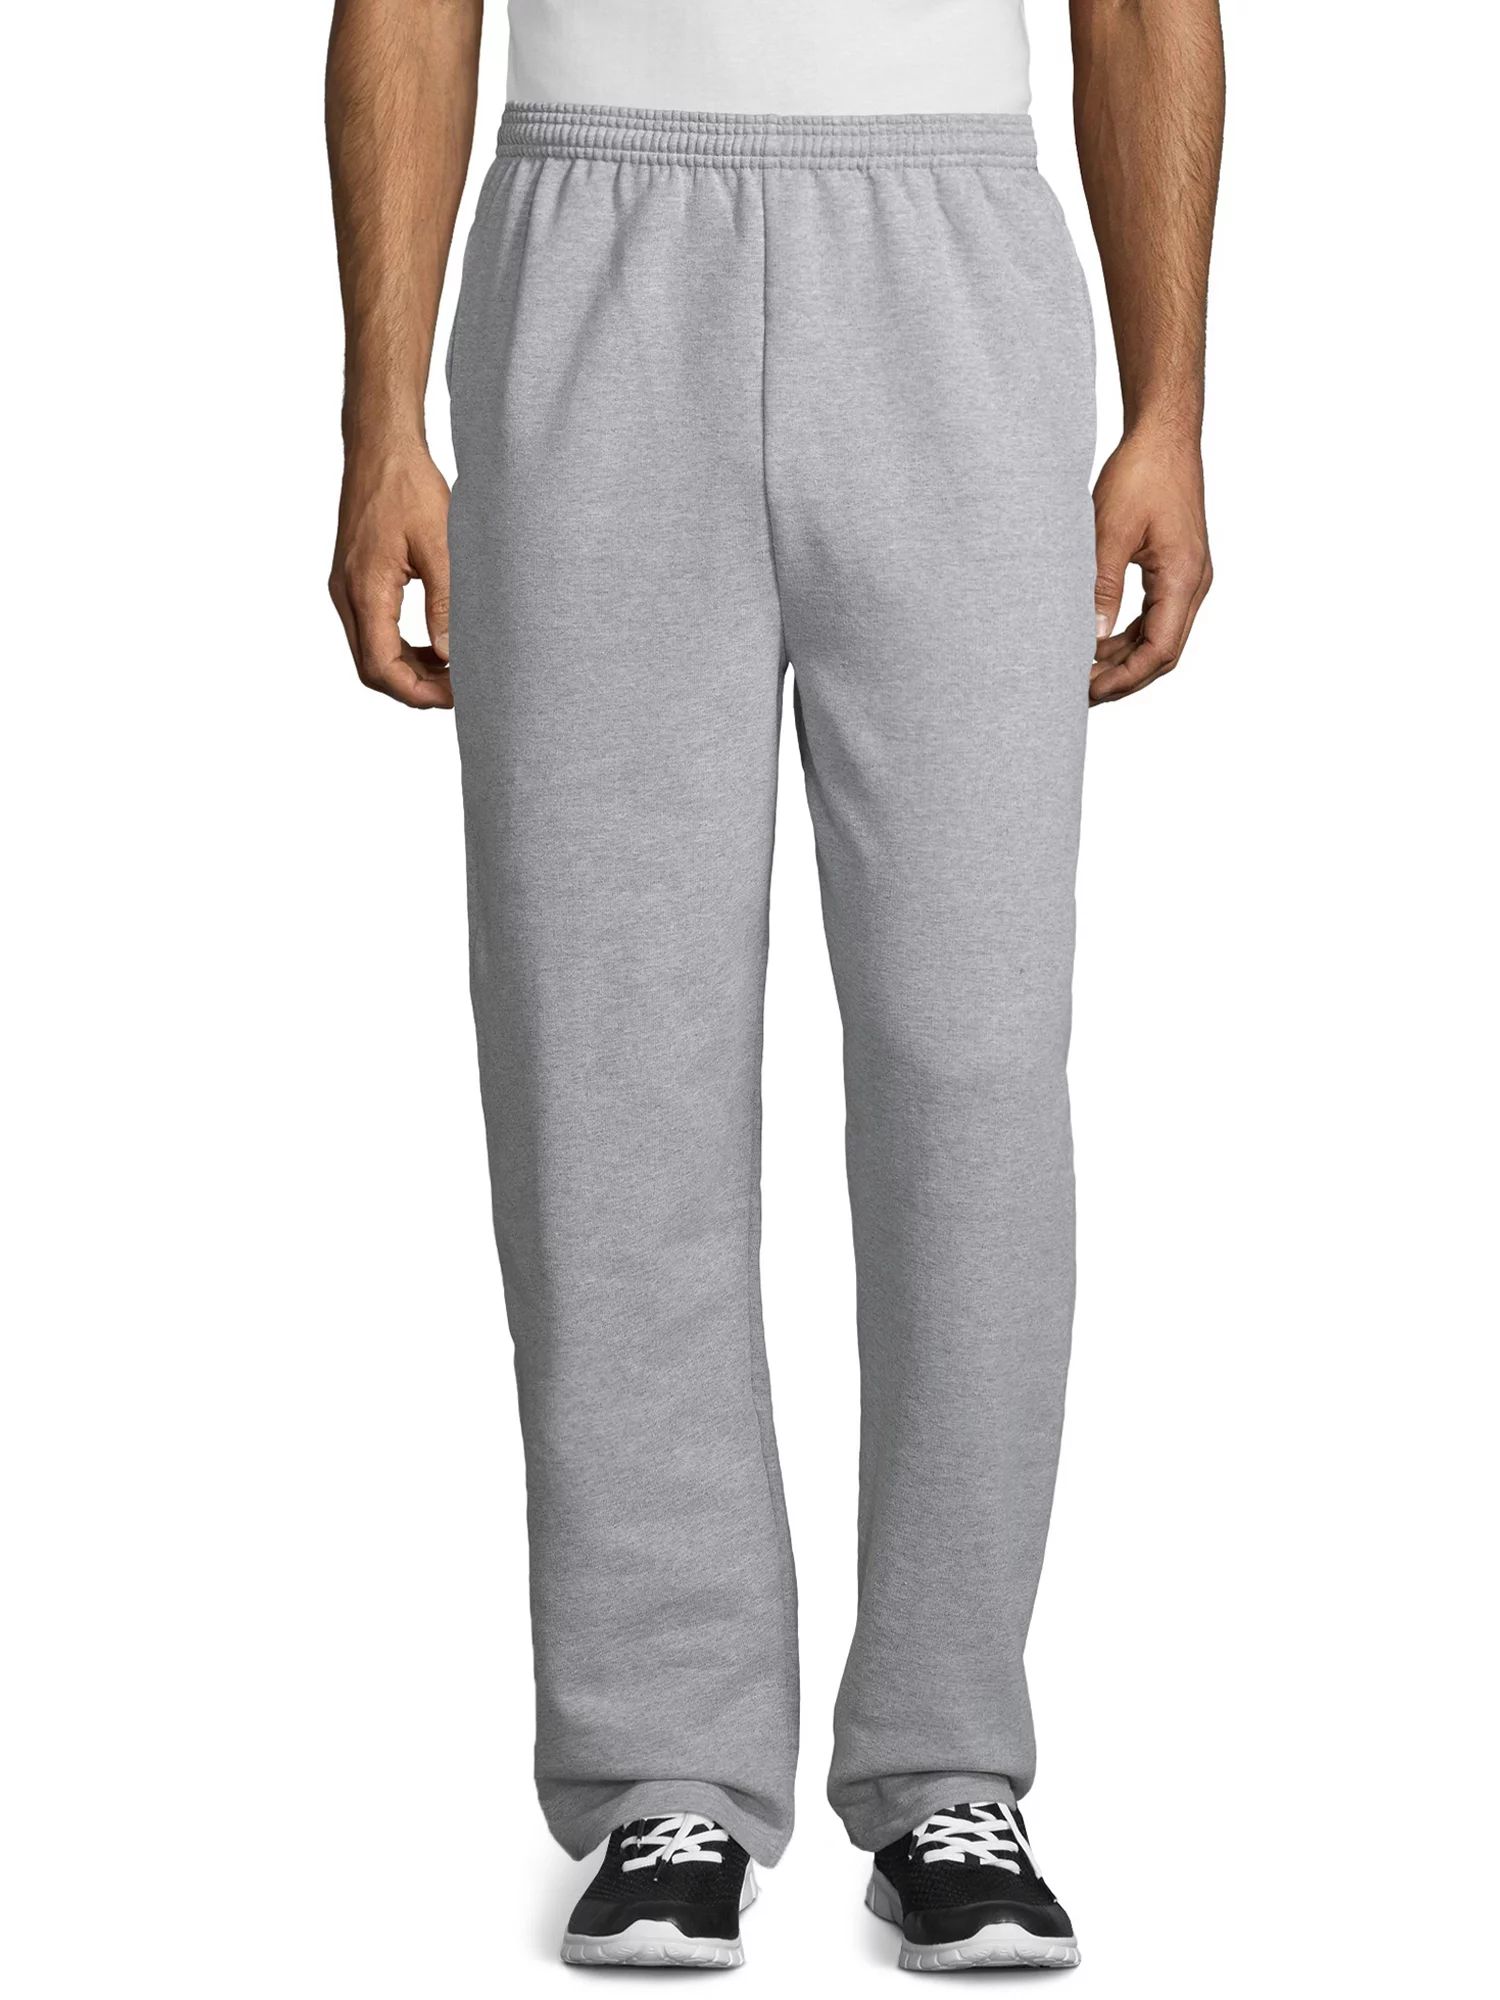 Hanes Men's and Big Men's Ecosmart Fleece Sweatpant with Pockets, up to Size 2XL | Walmart (US)